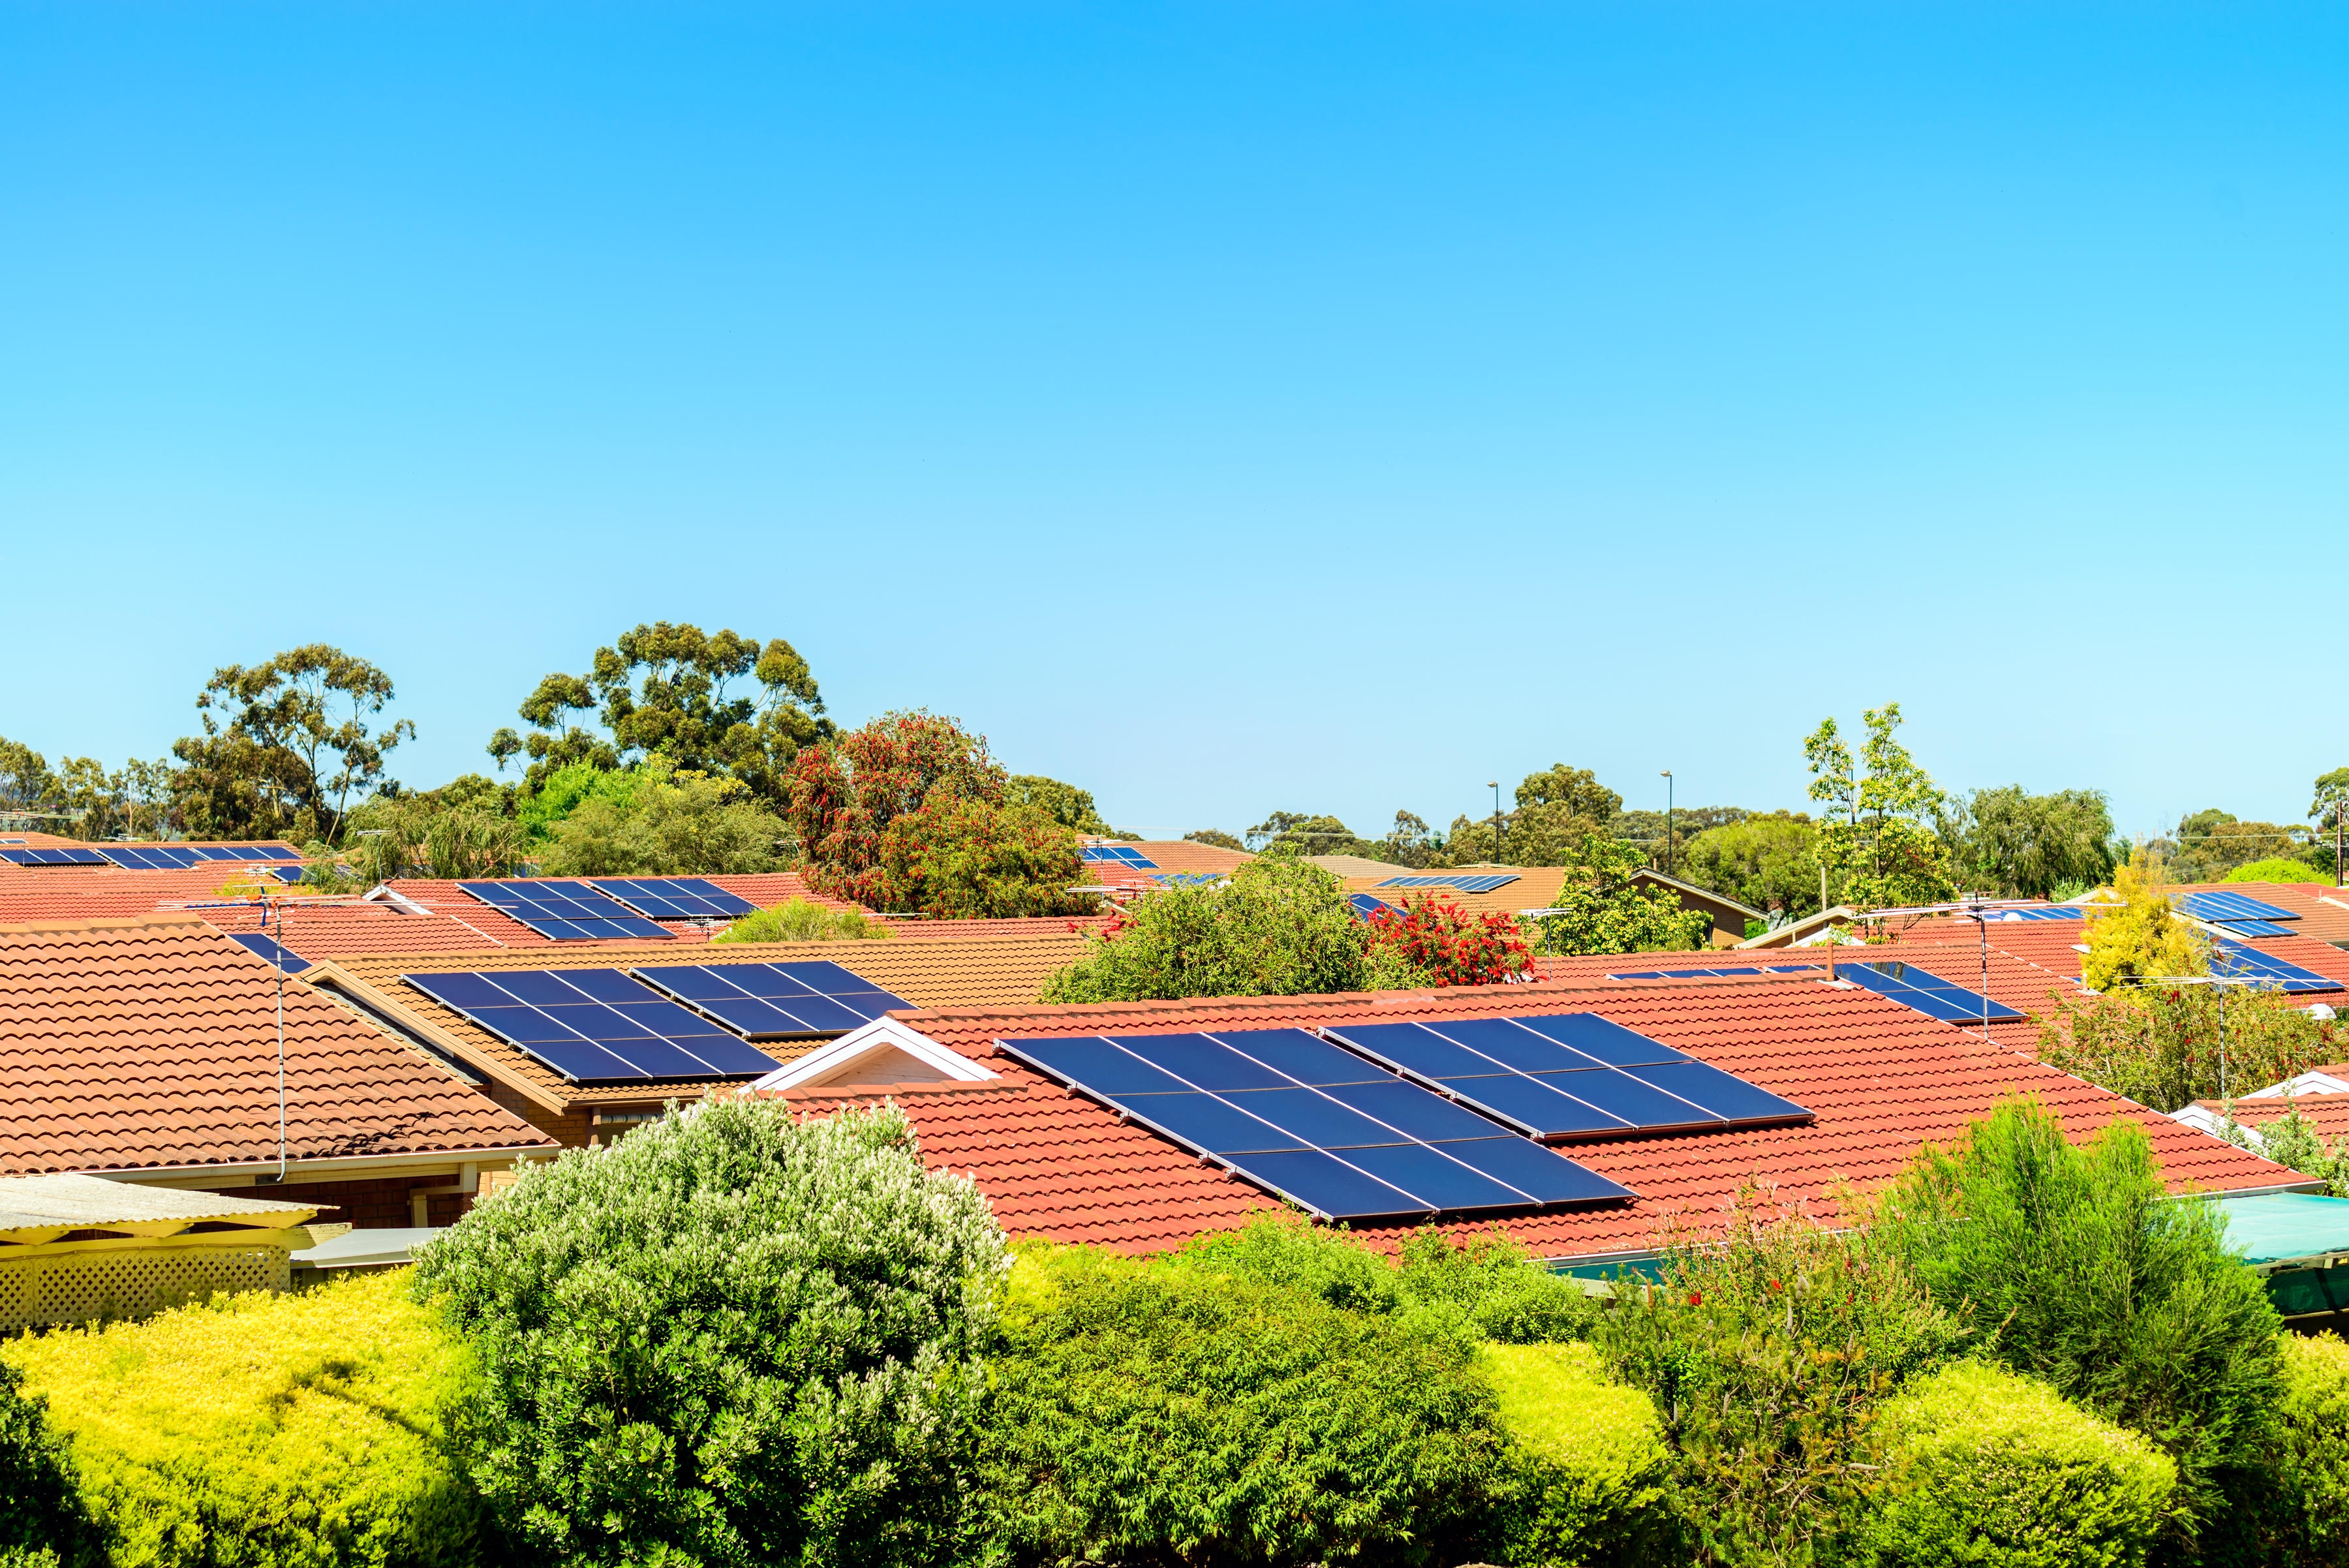 Solar-panels-on-Austrlaian-homes-Jason-Knott-Alamy-Stock-Photo